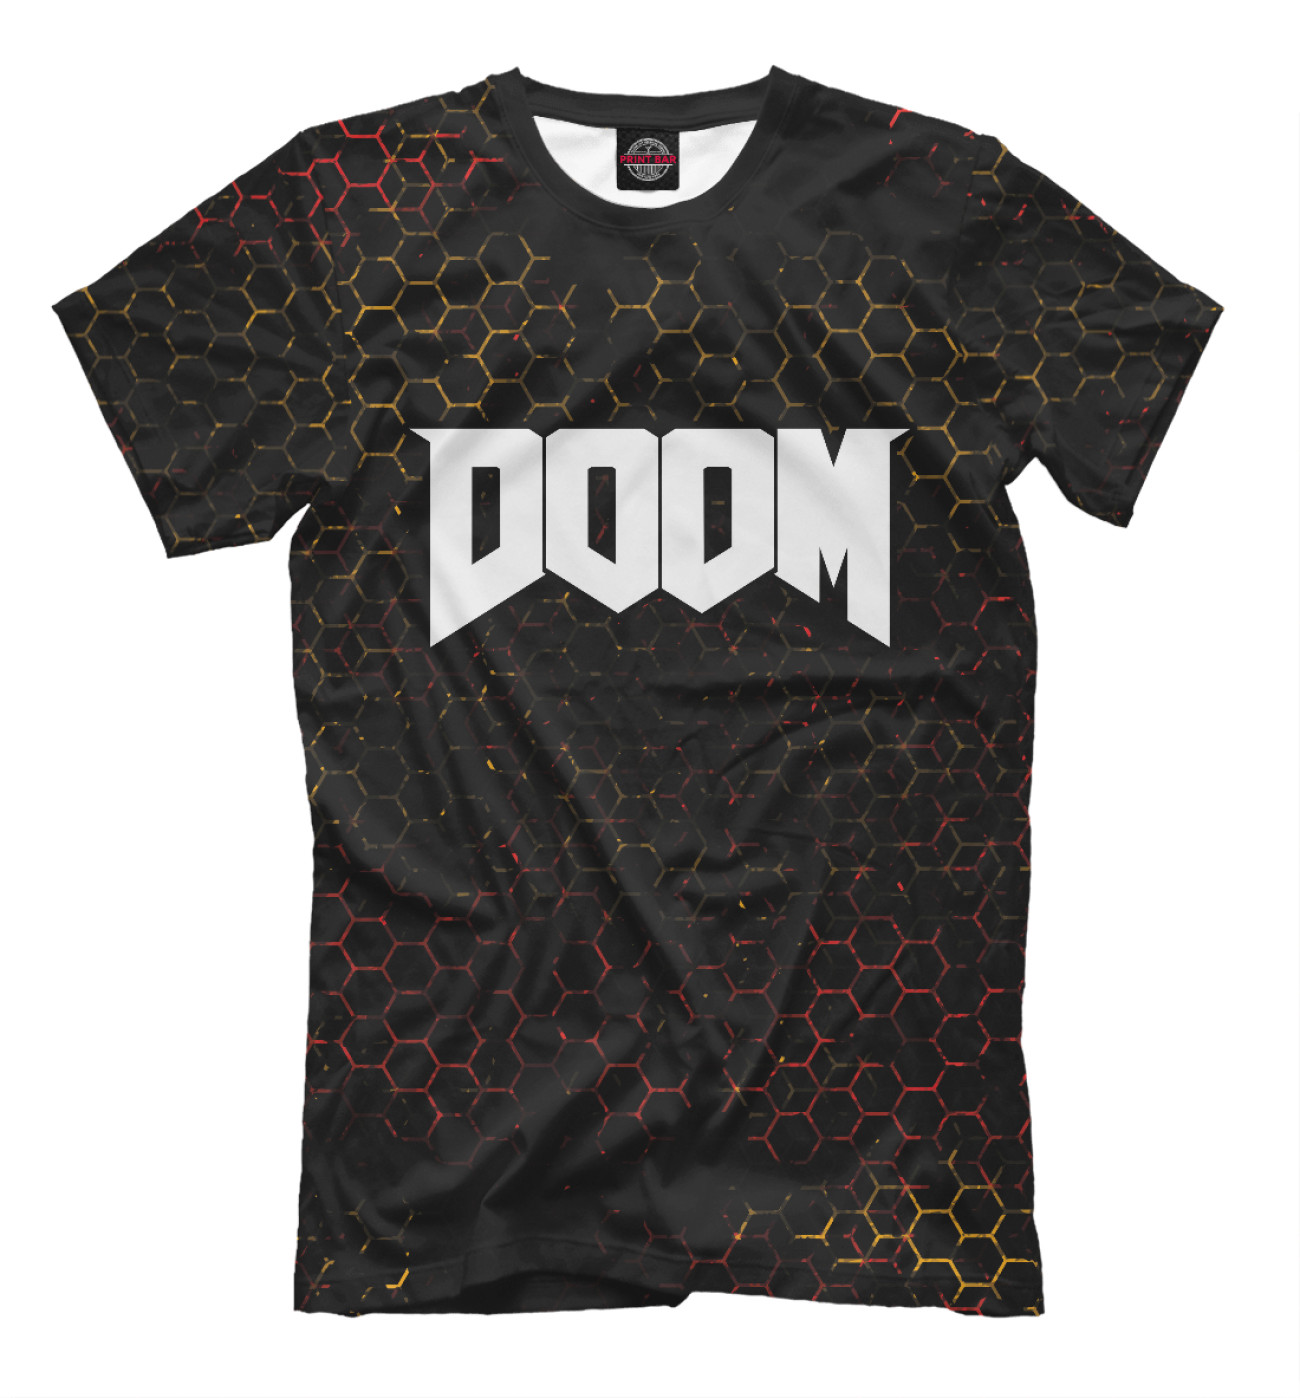 Мужская Футболка Doom / Дум, артикул: DOO-374335-fut-2